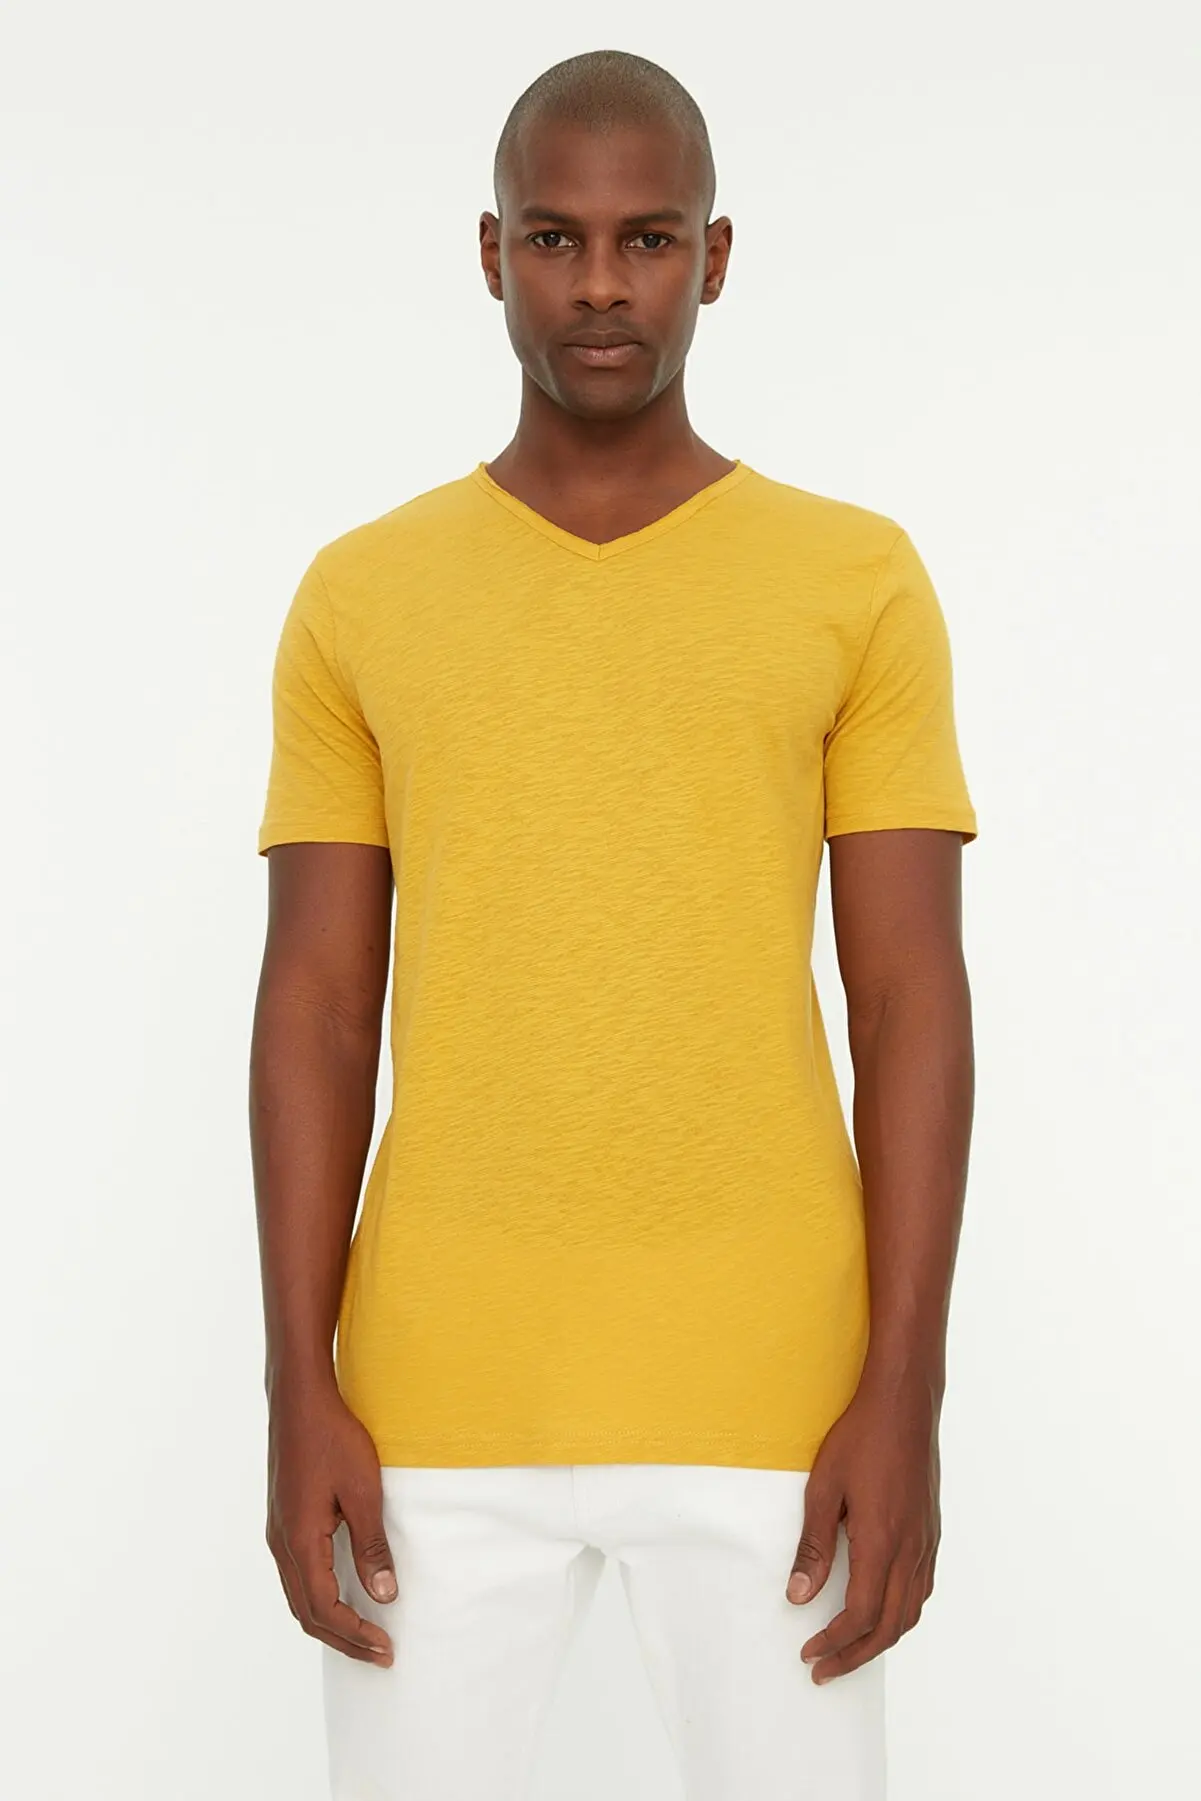 

Mustard Men's Basic Regular Fit V-Neck 100% Cotton T-Shirt Shirts For Men Tee For Men Summer Spring Fashion